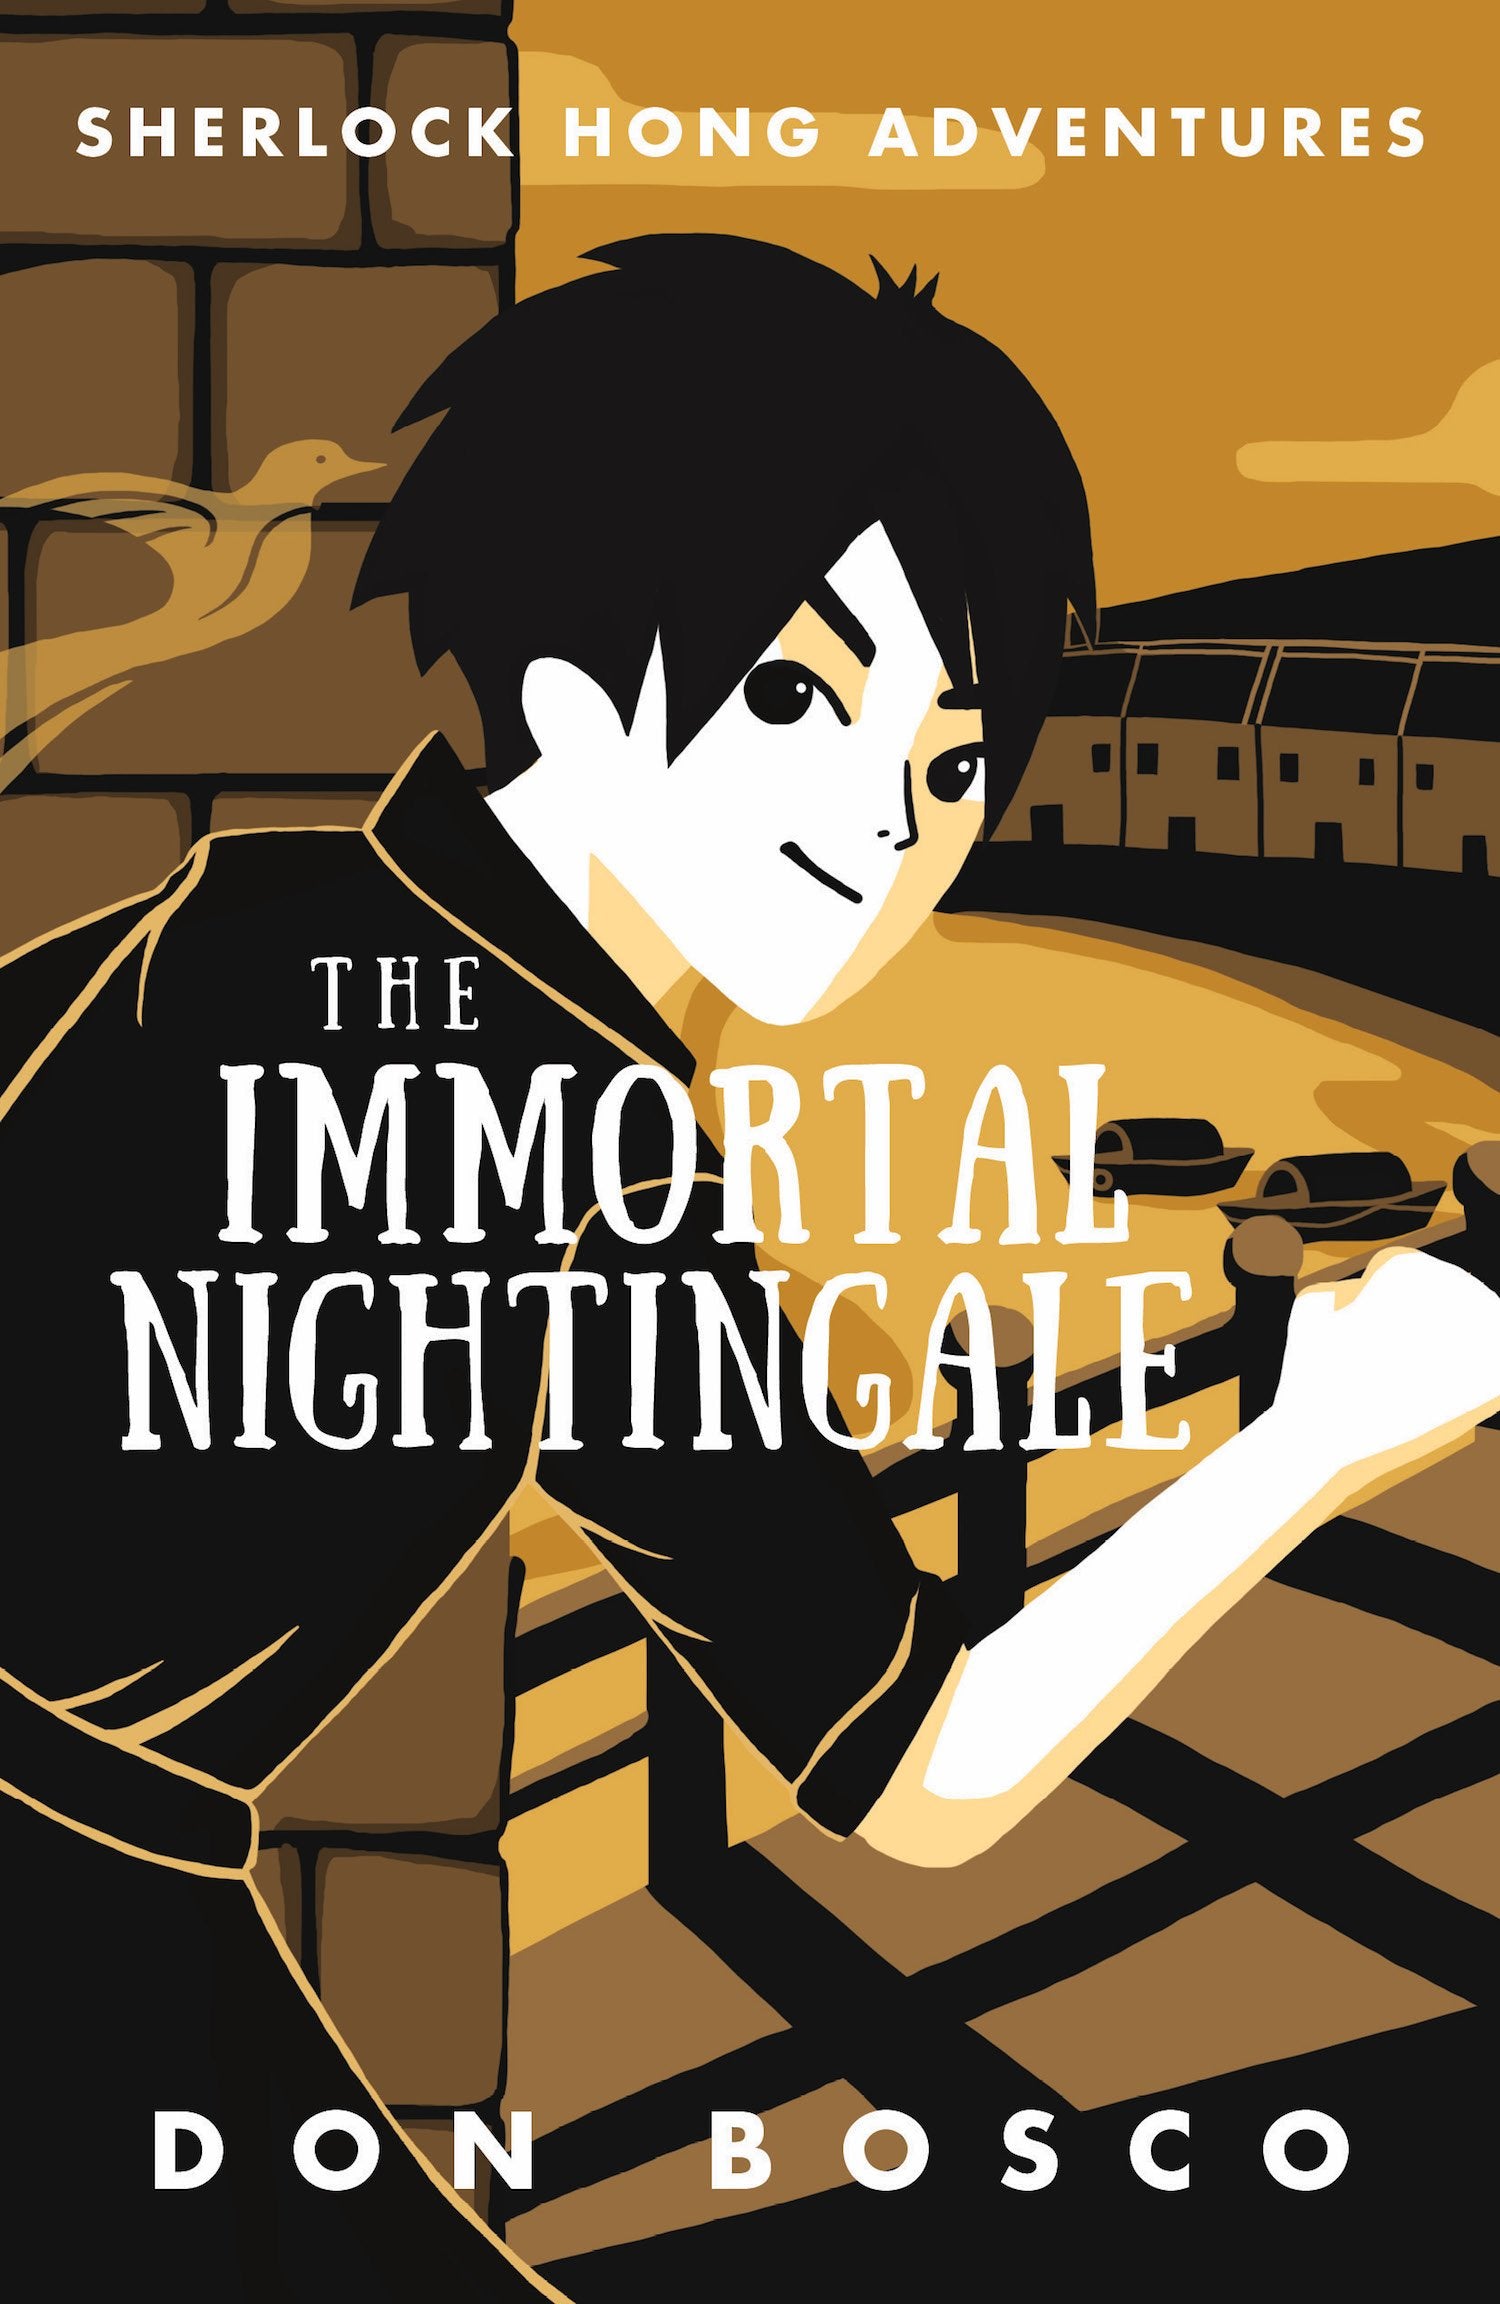 Sherlock Hong Adventures: The Immortal Nightingale (Book 1)